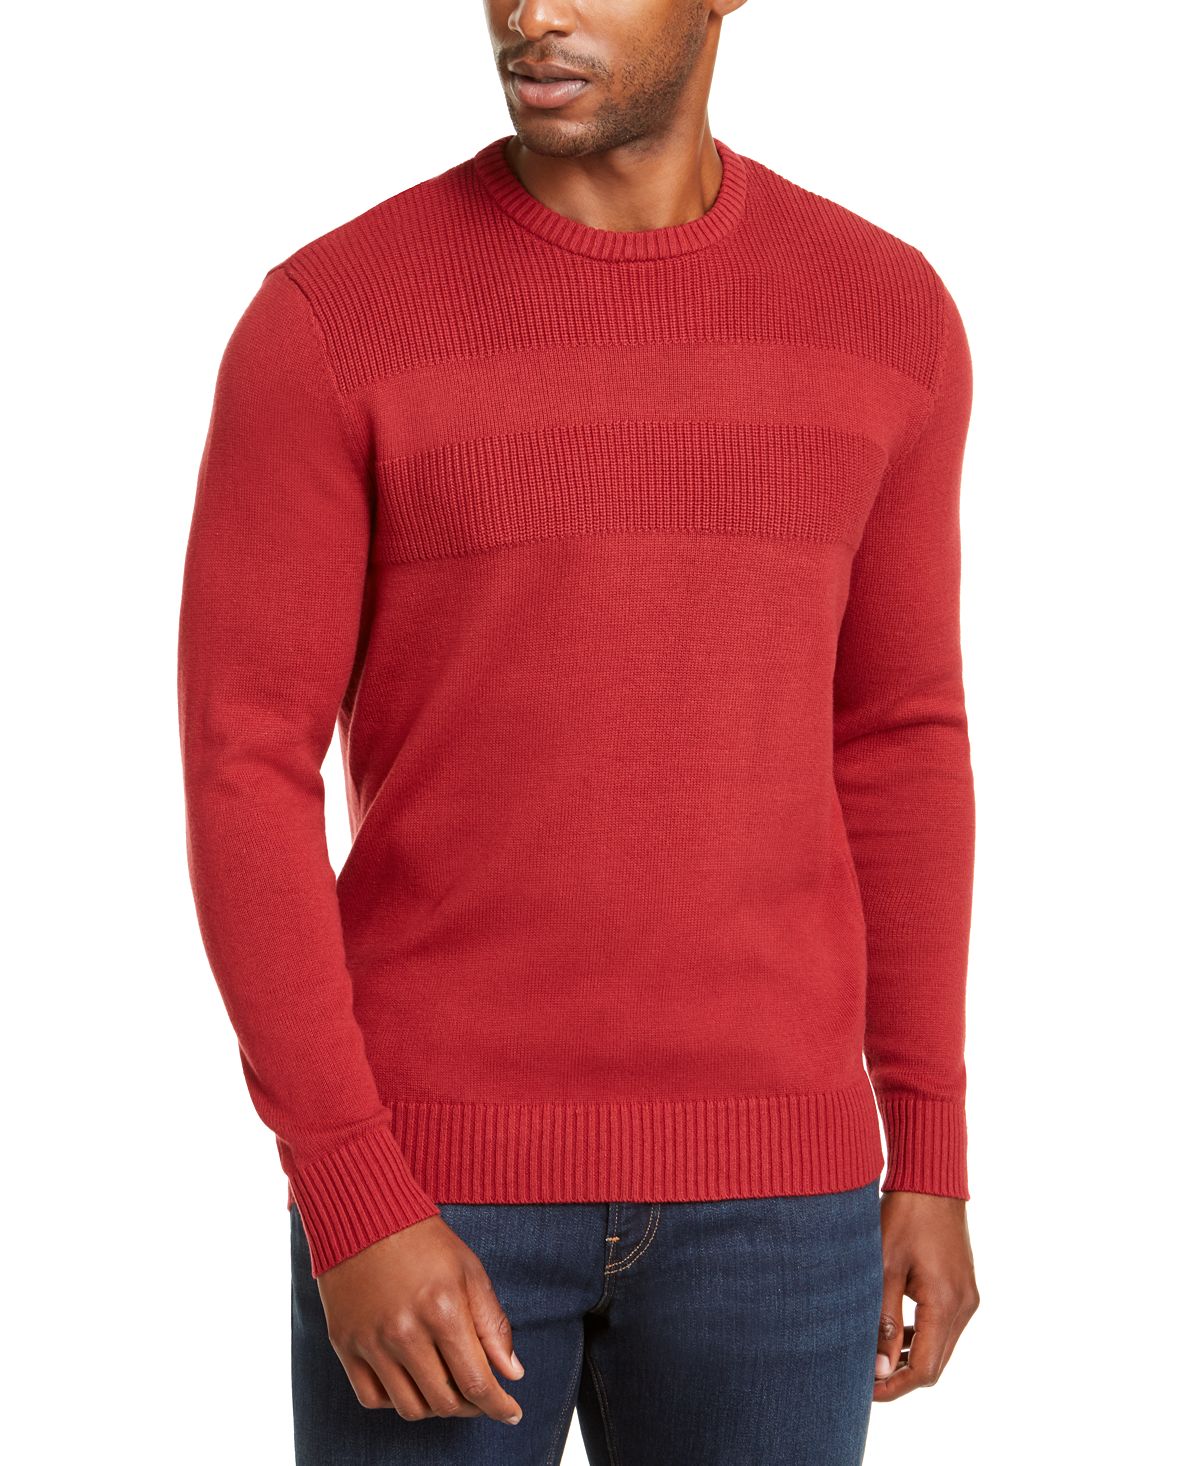 Club Room Cotton Solid Textured Crew Neck Sweater Maraschino